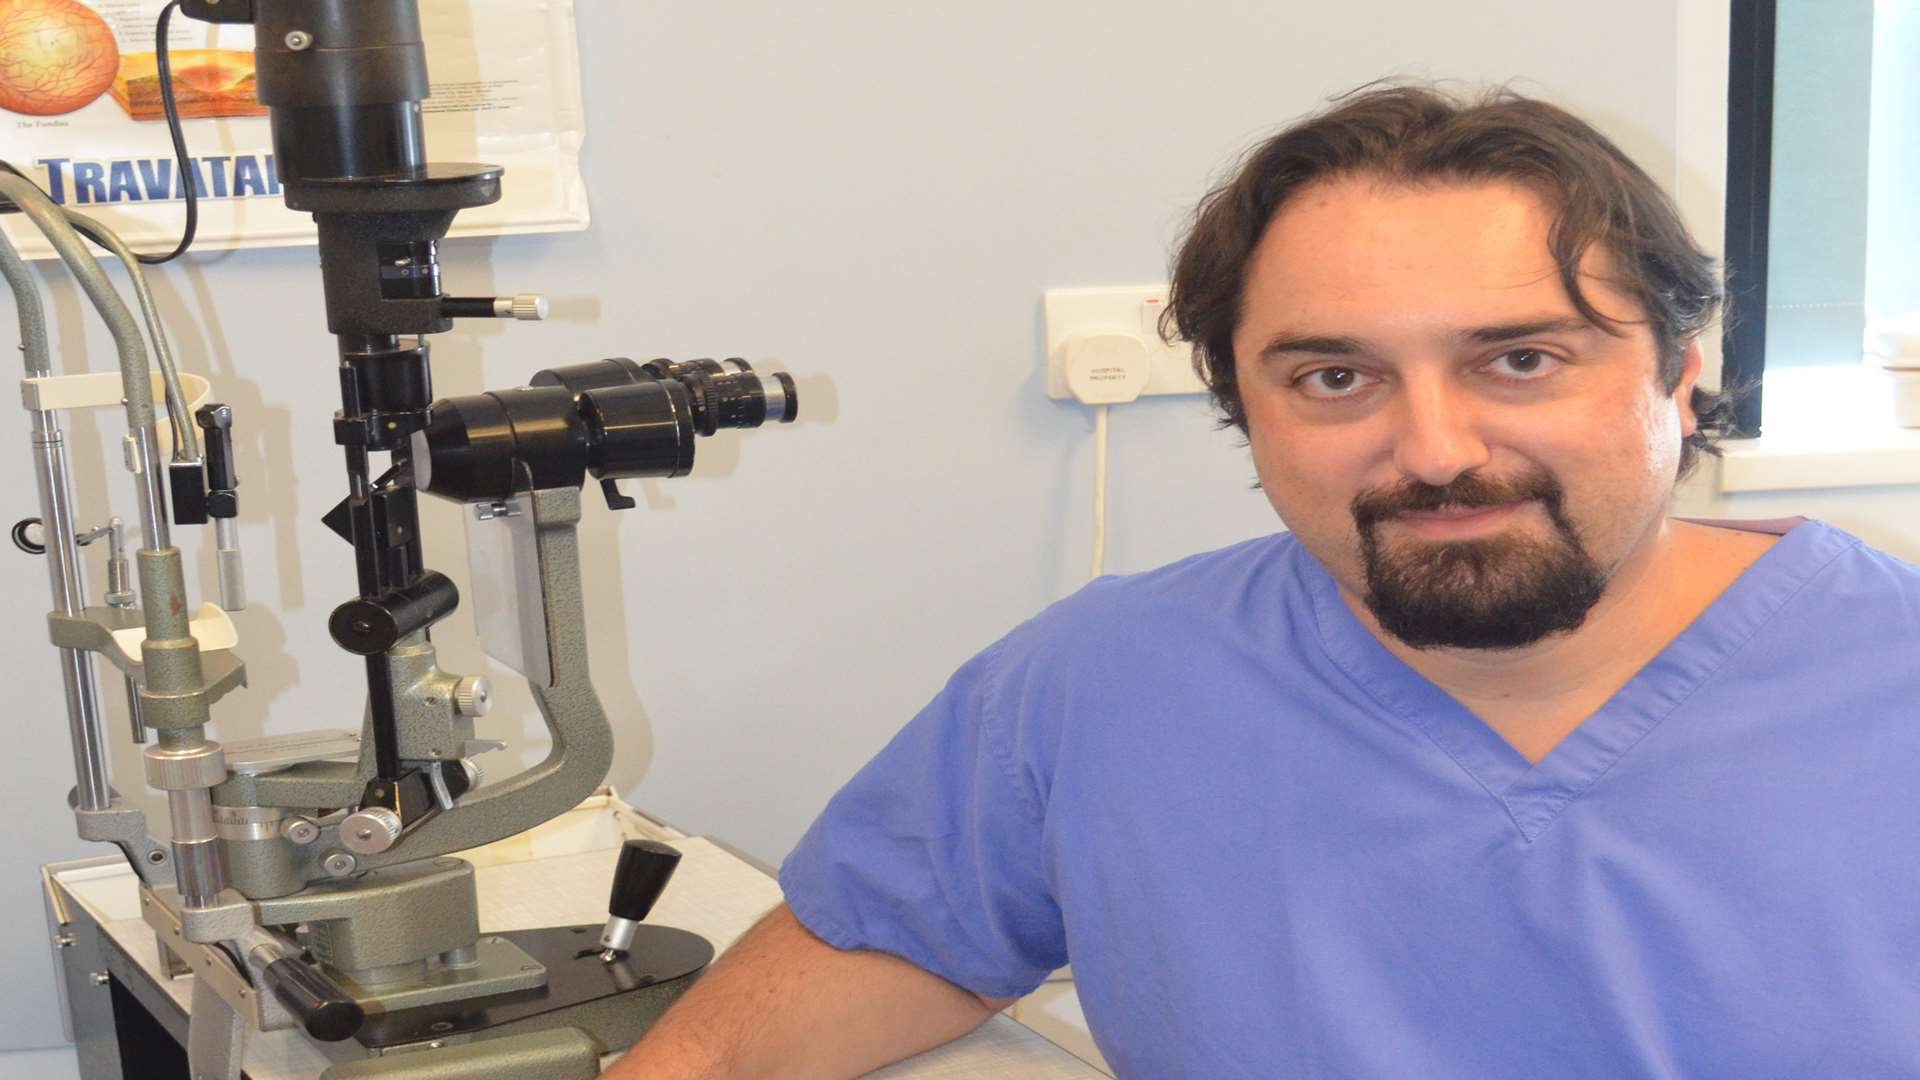 Consultant opthalmologist Nick Kopsachilis